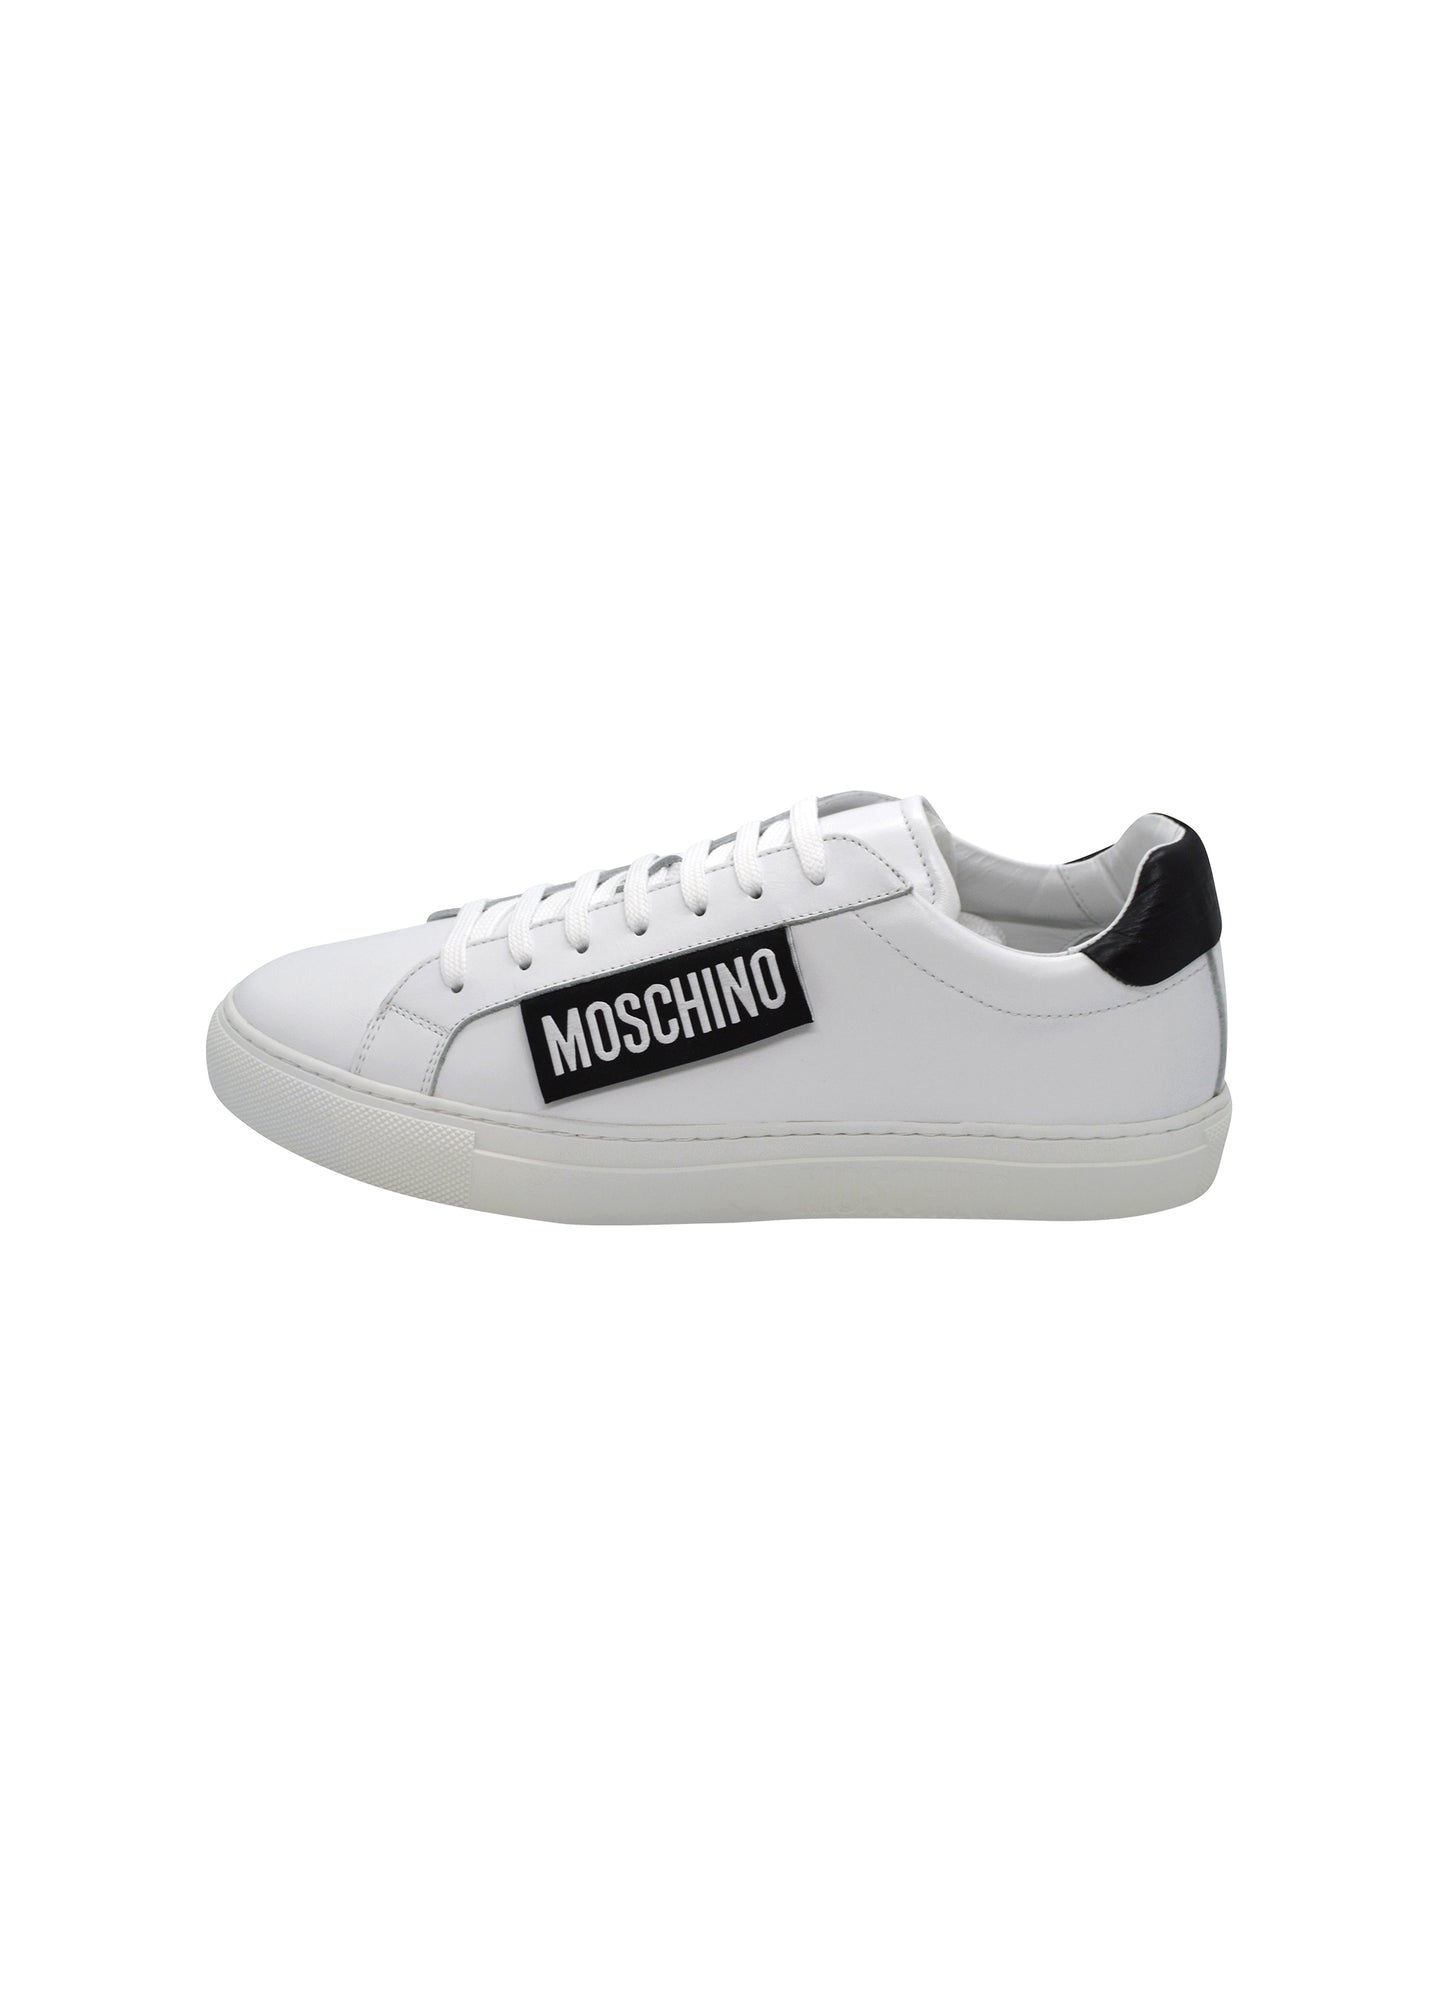 Moschino - Classic Low Top Side Moschino Tab Tennis Shoe - 200306 - White